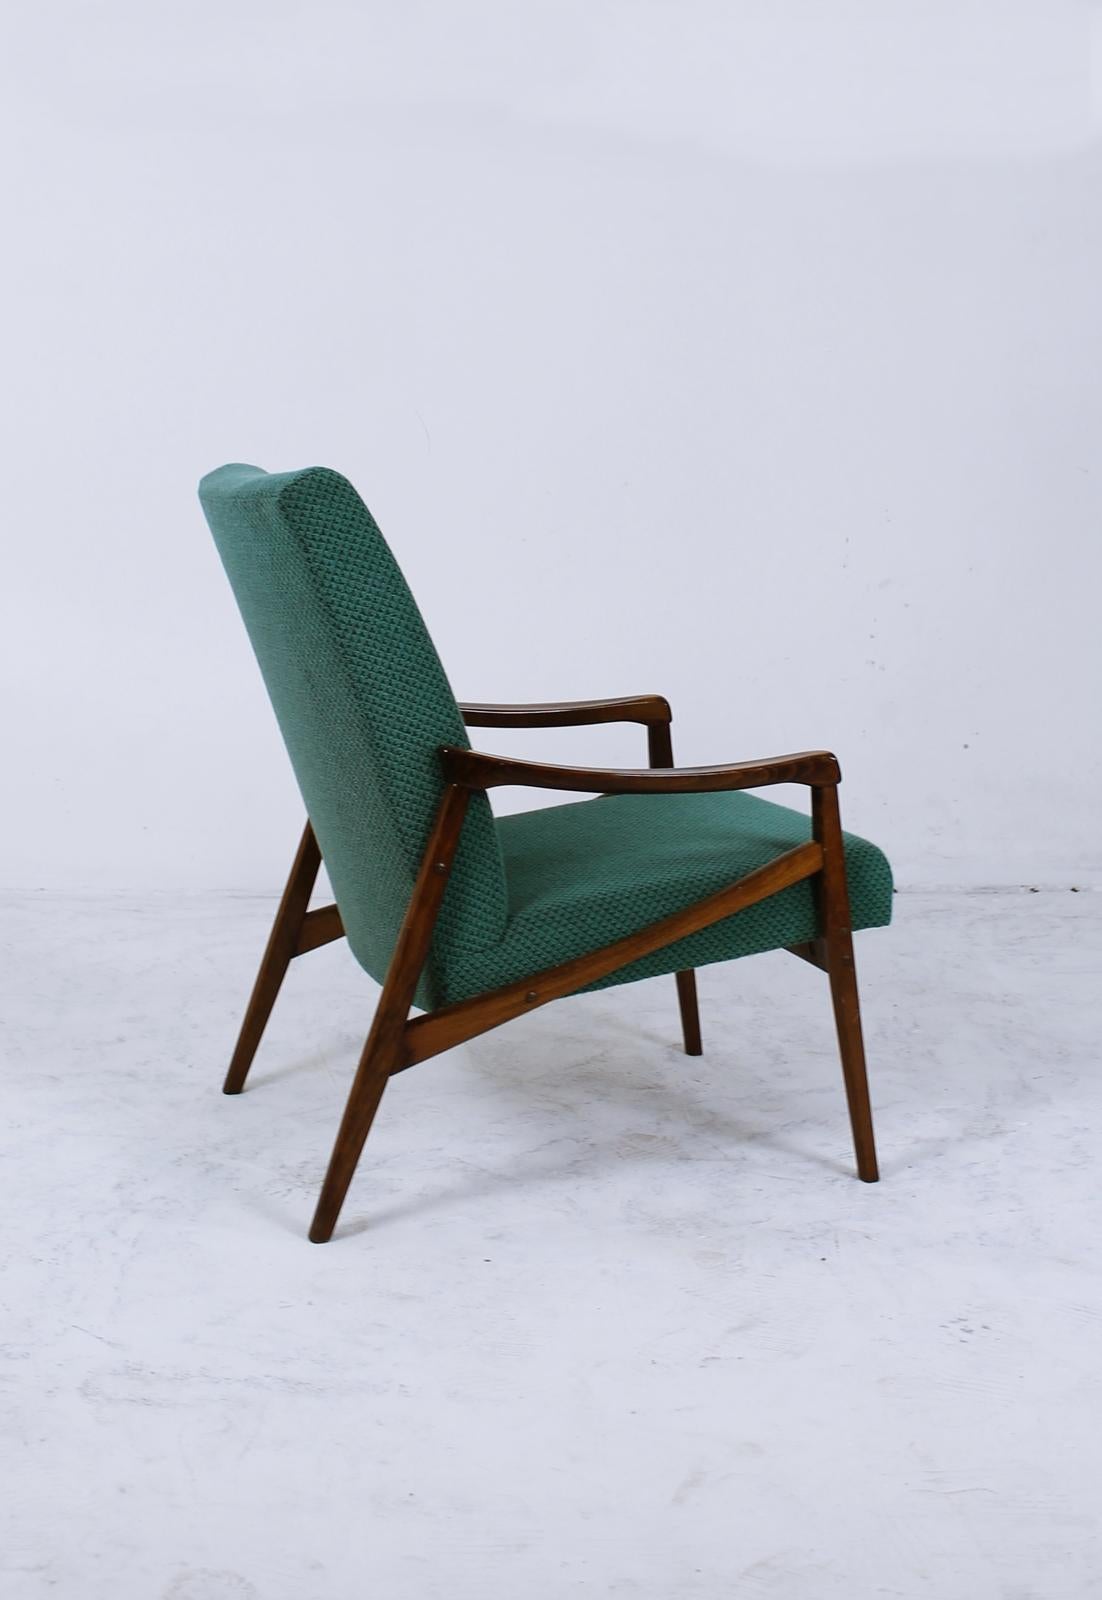 European Mid-Century Modern Lounge Chair by Jiří Jiroutek for Interier Praha